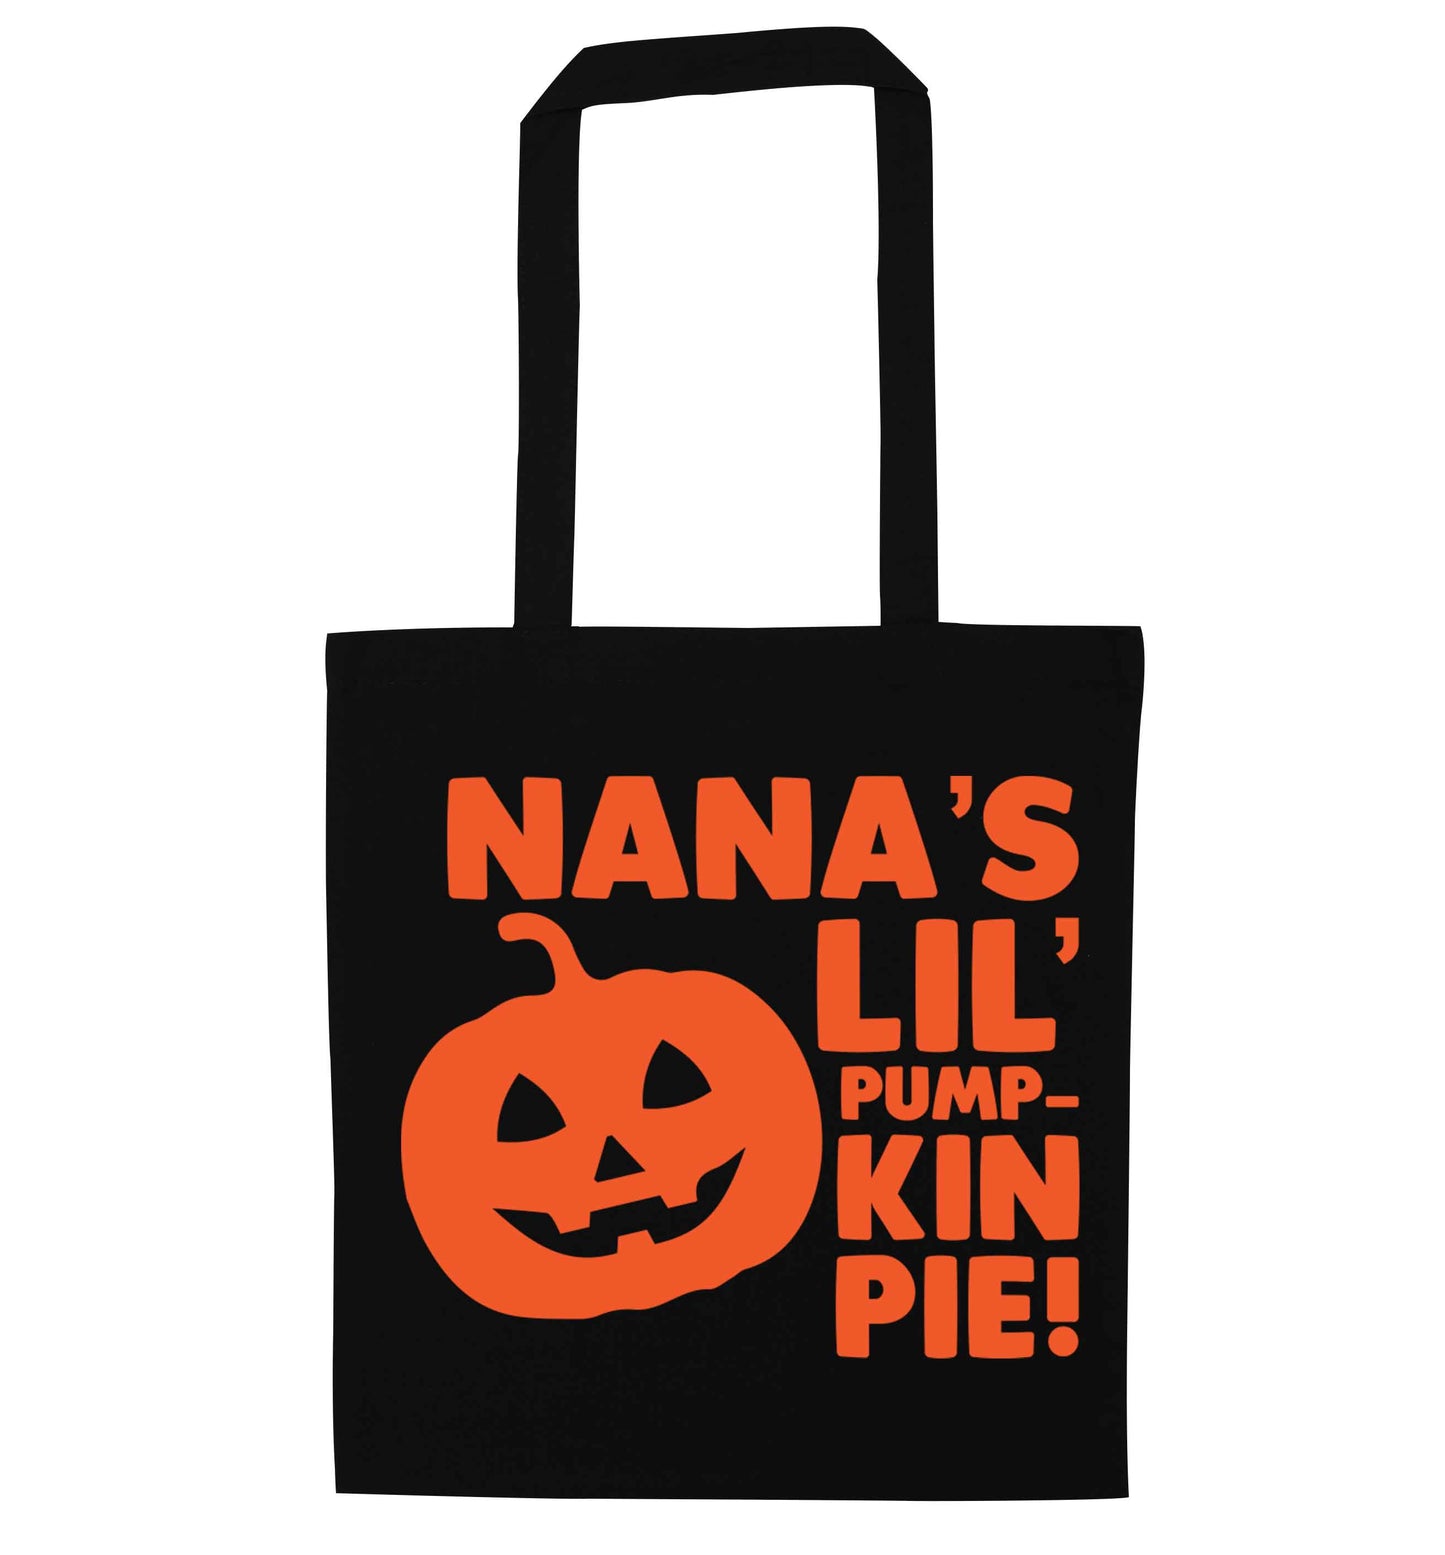 Nana's lil' pumpkin pie black tote bag